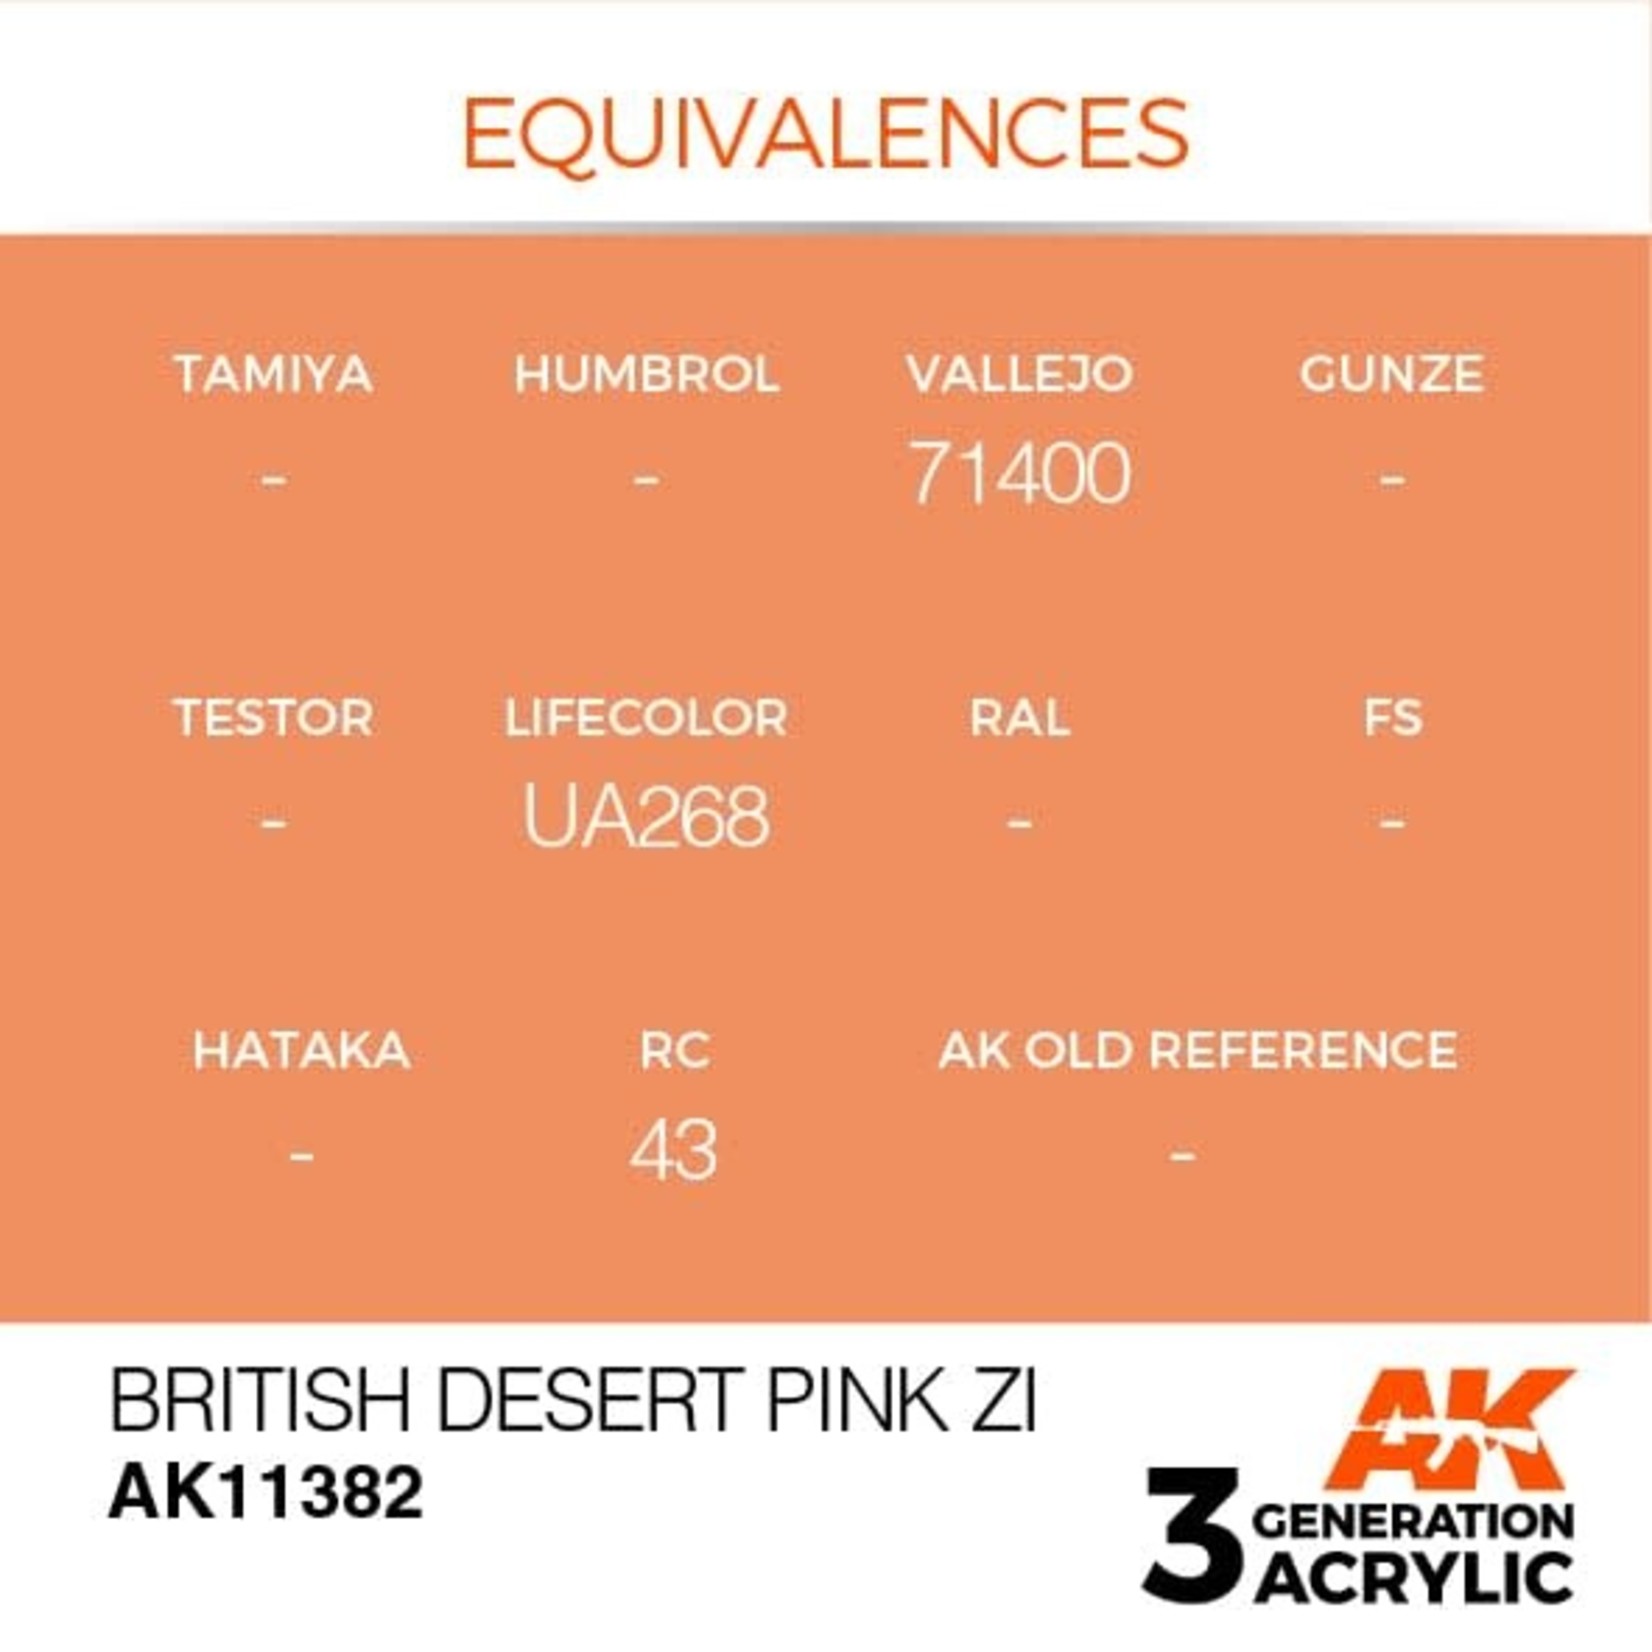 AK Interactive AK11382 3G AFV British Desert Pink ZI 17ml